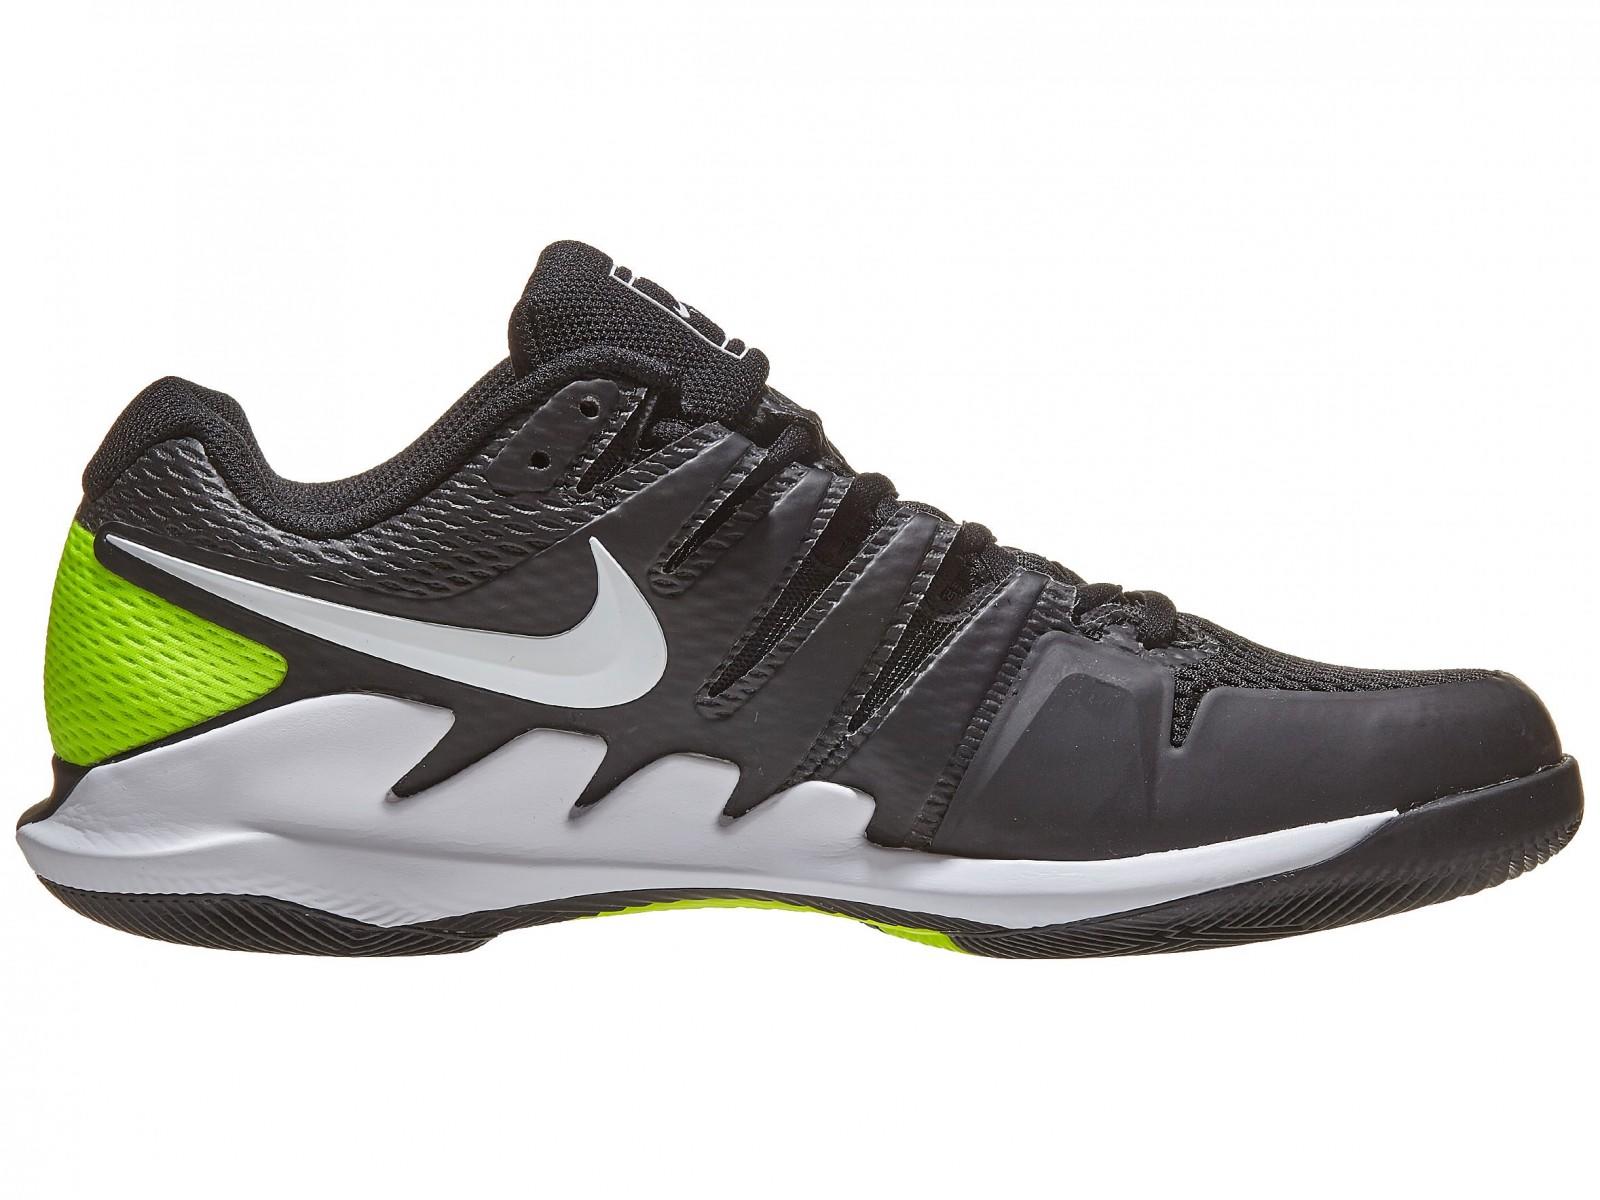 Теннисные кроссовки мужские Nike Air Zoom Vapor X black/white/volt